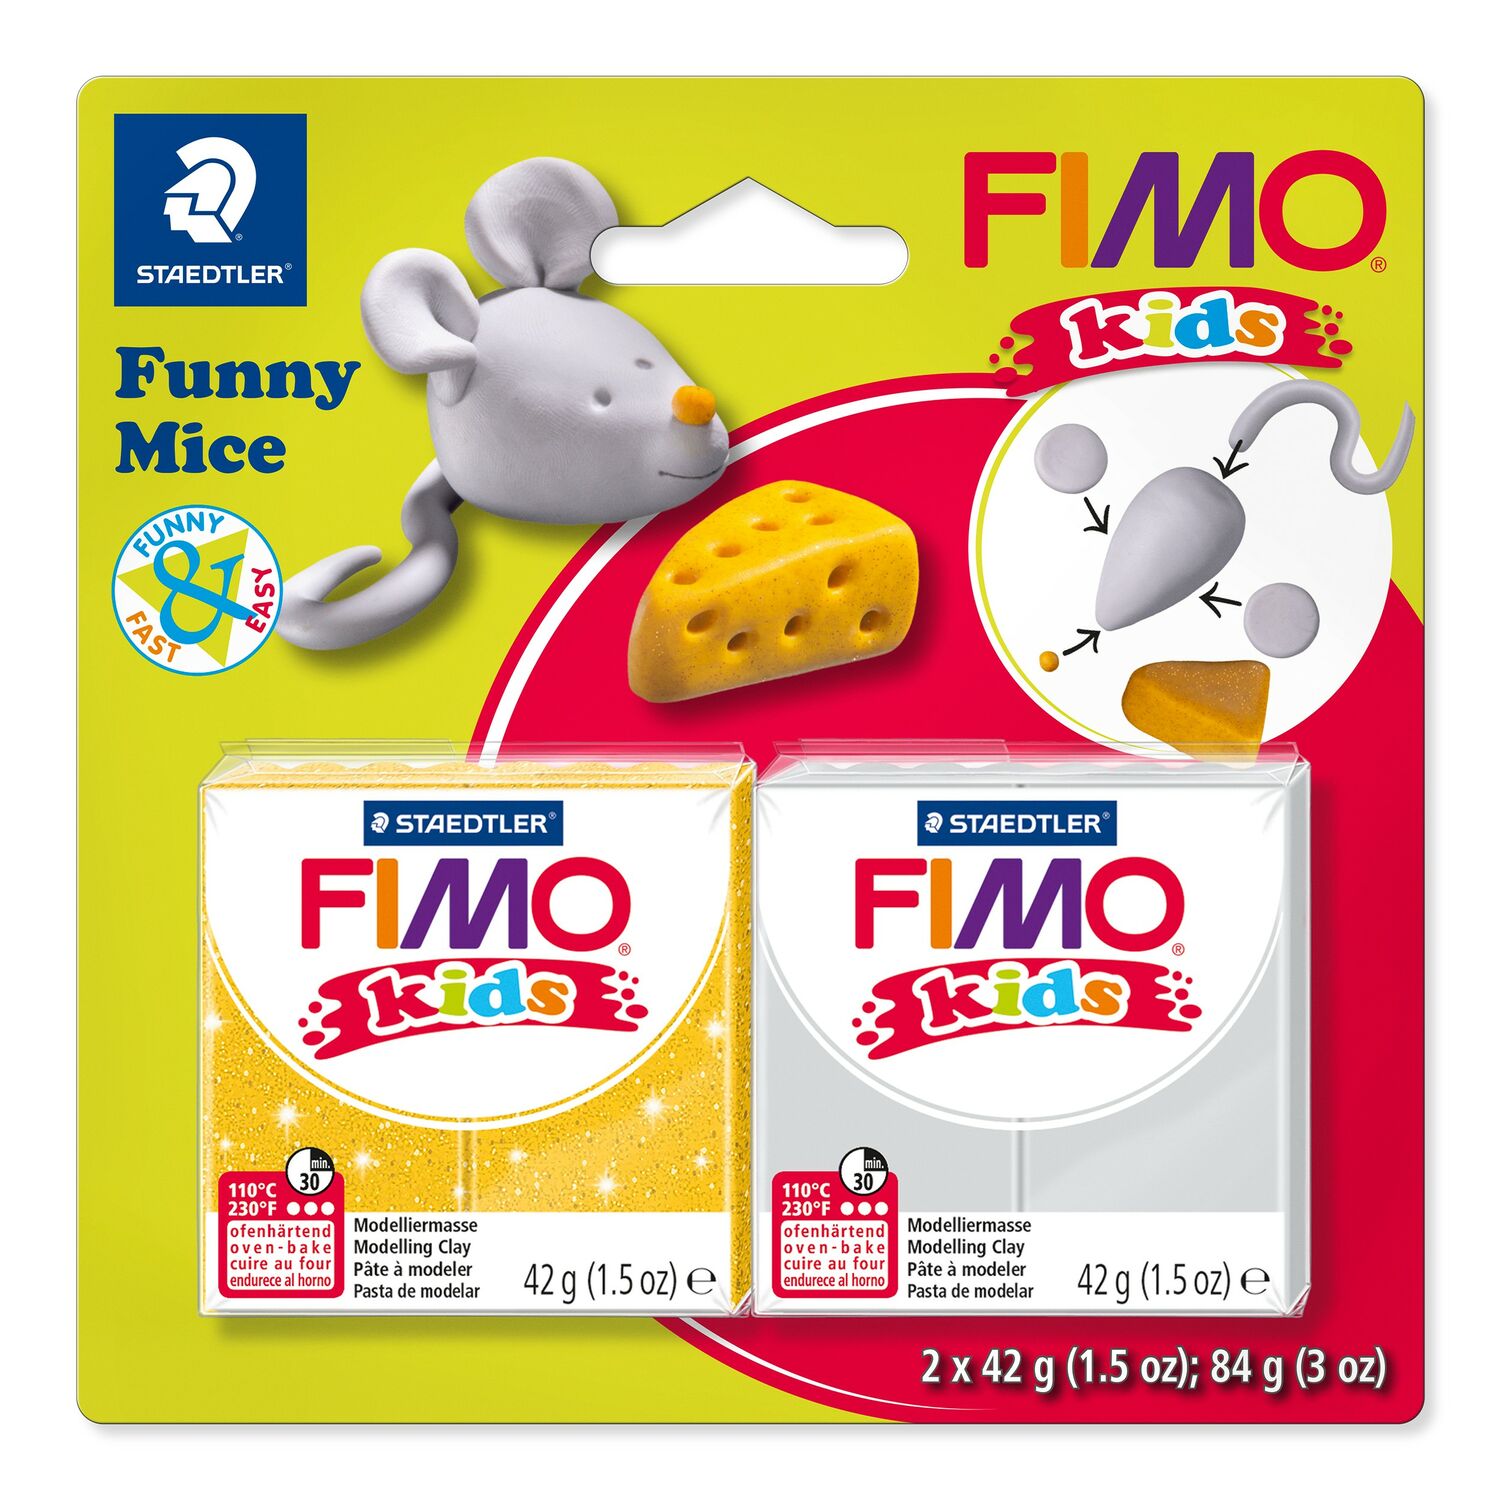 Set 'Funny Mice' on blistercard Content: 2 blocks á 42 g (glitter gold, grey), instructions